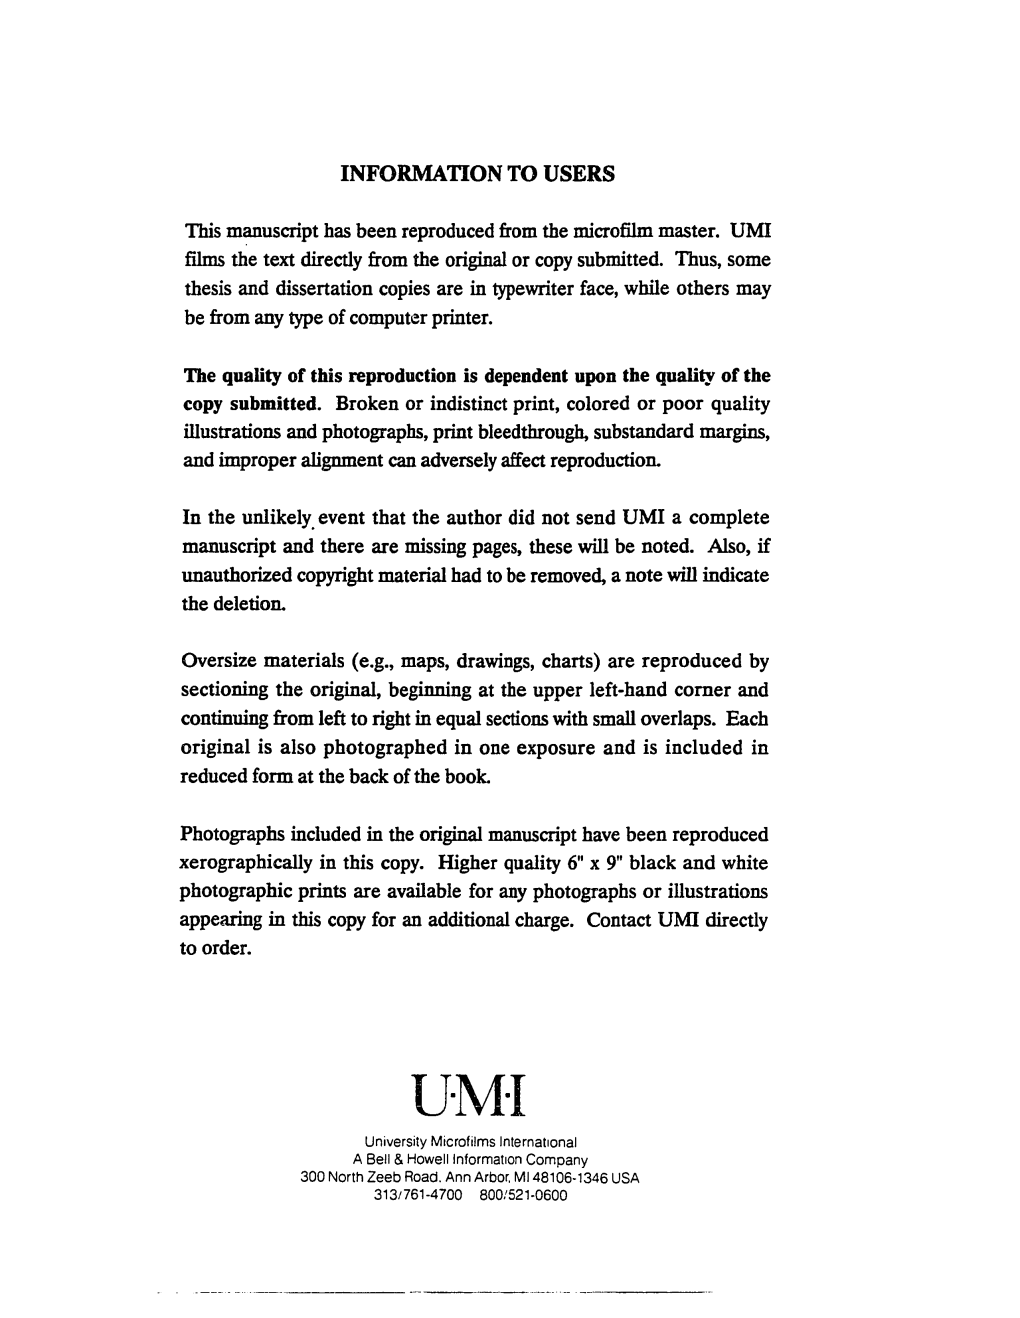 U·M·I University Microfilms International a Bell & Howeluntormanon Company 300 North Zeeb Road